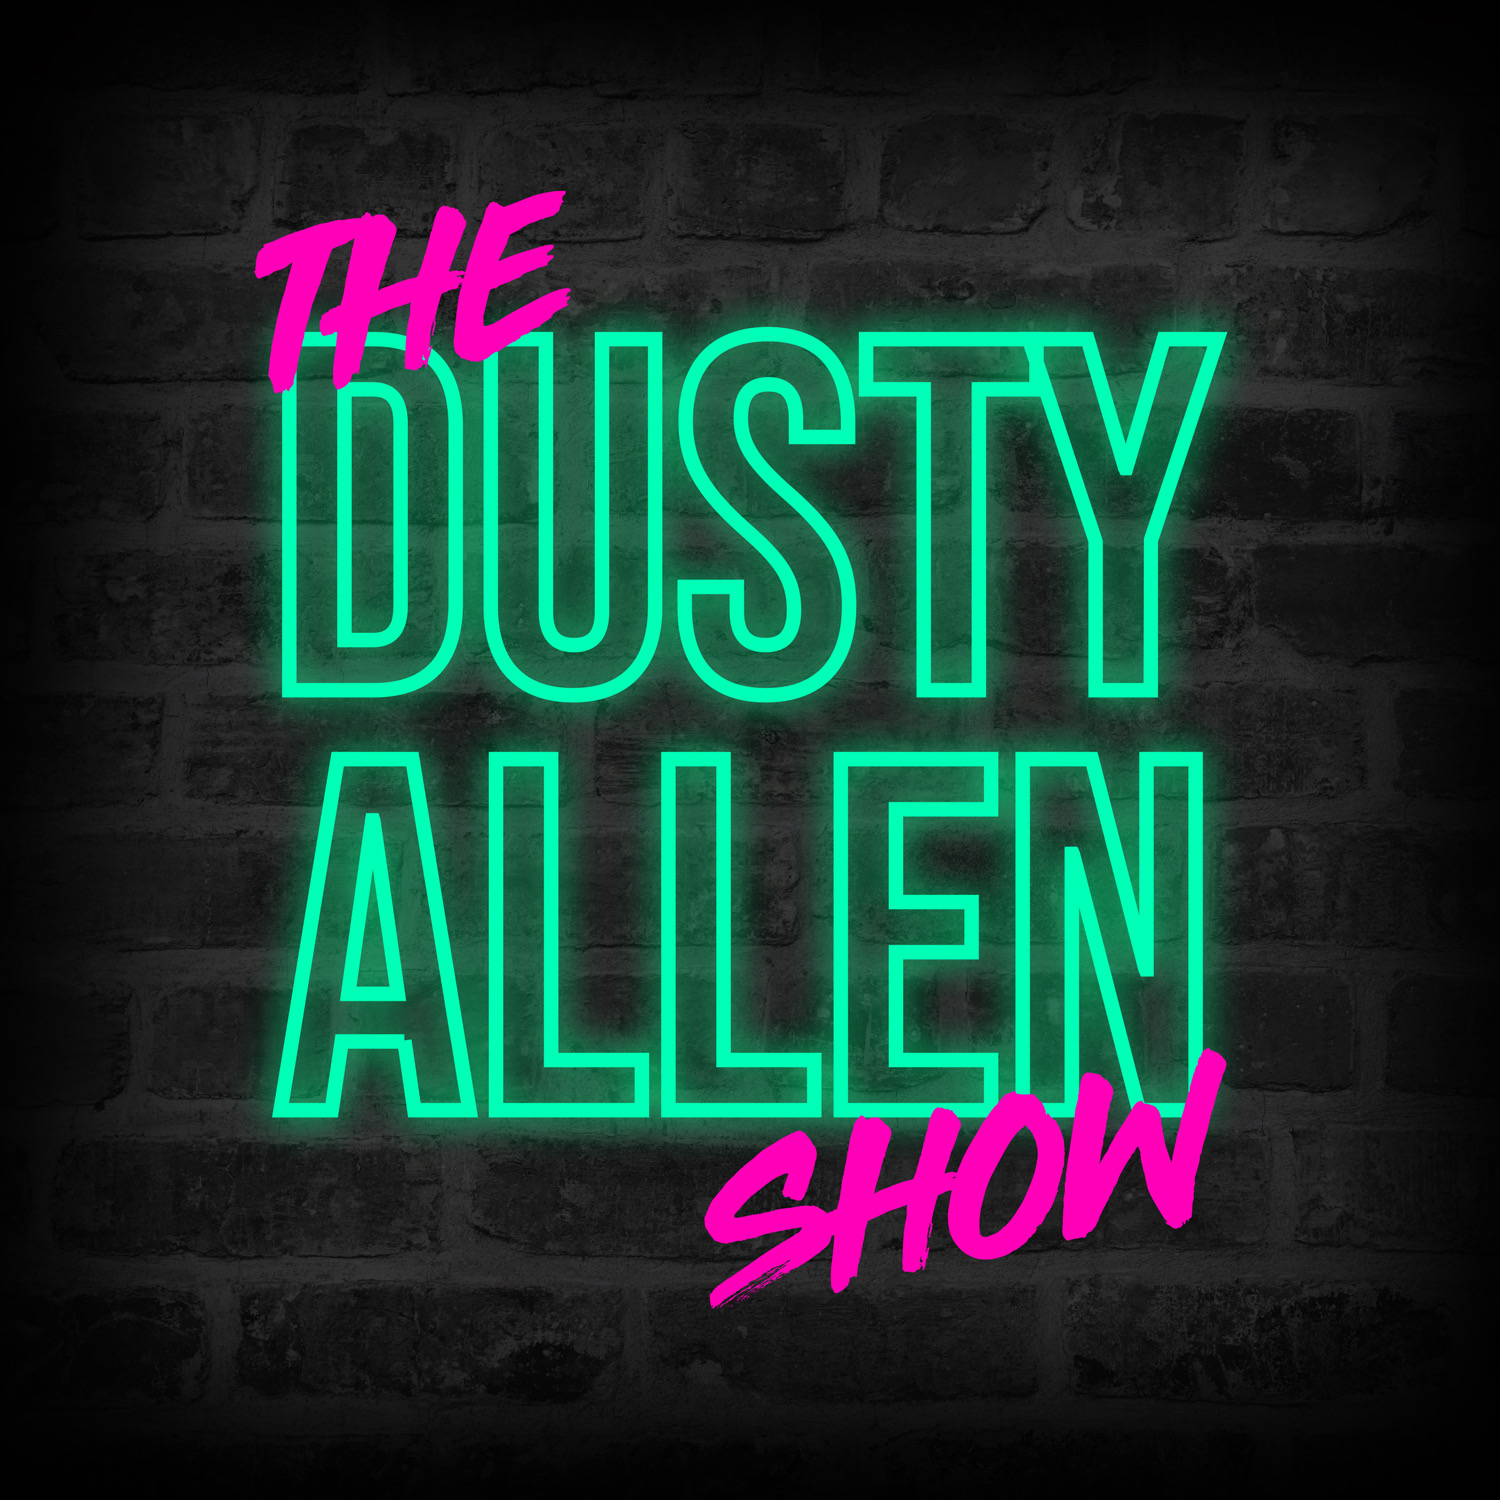 The Dusty Allen Show